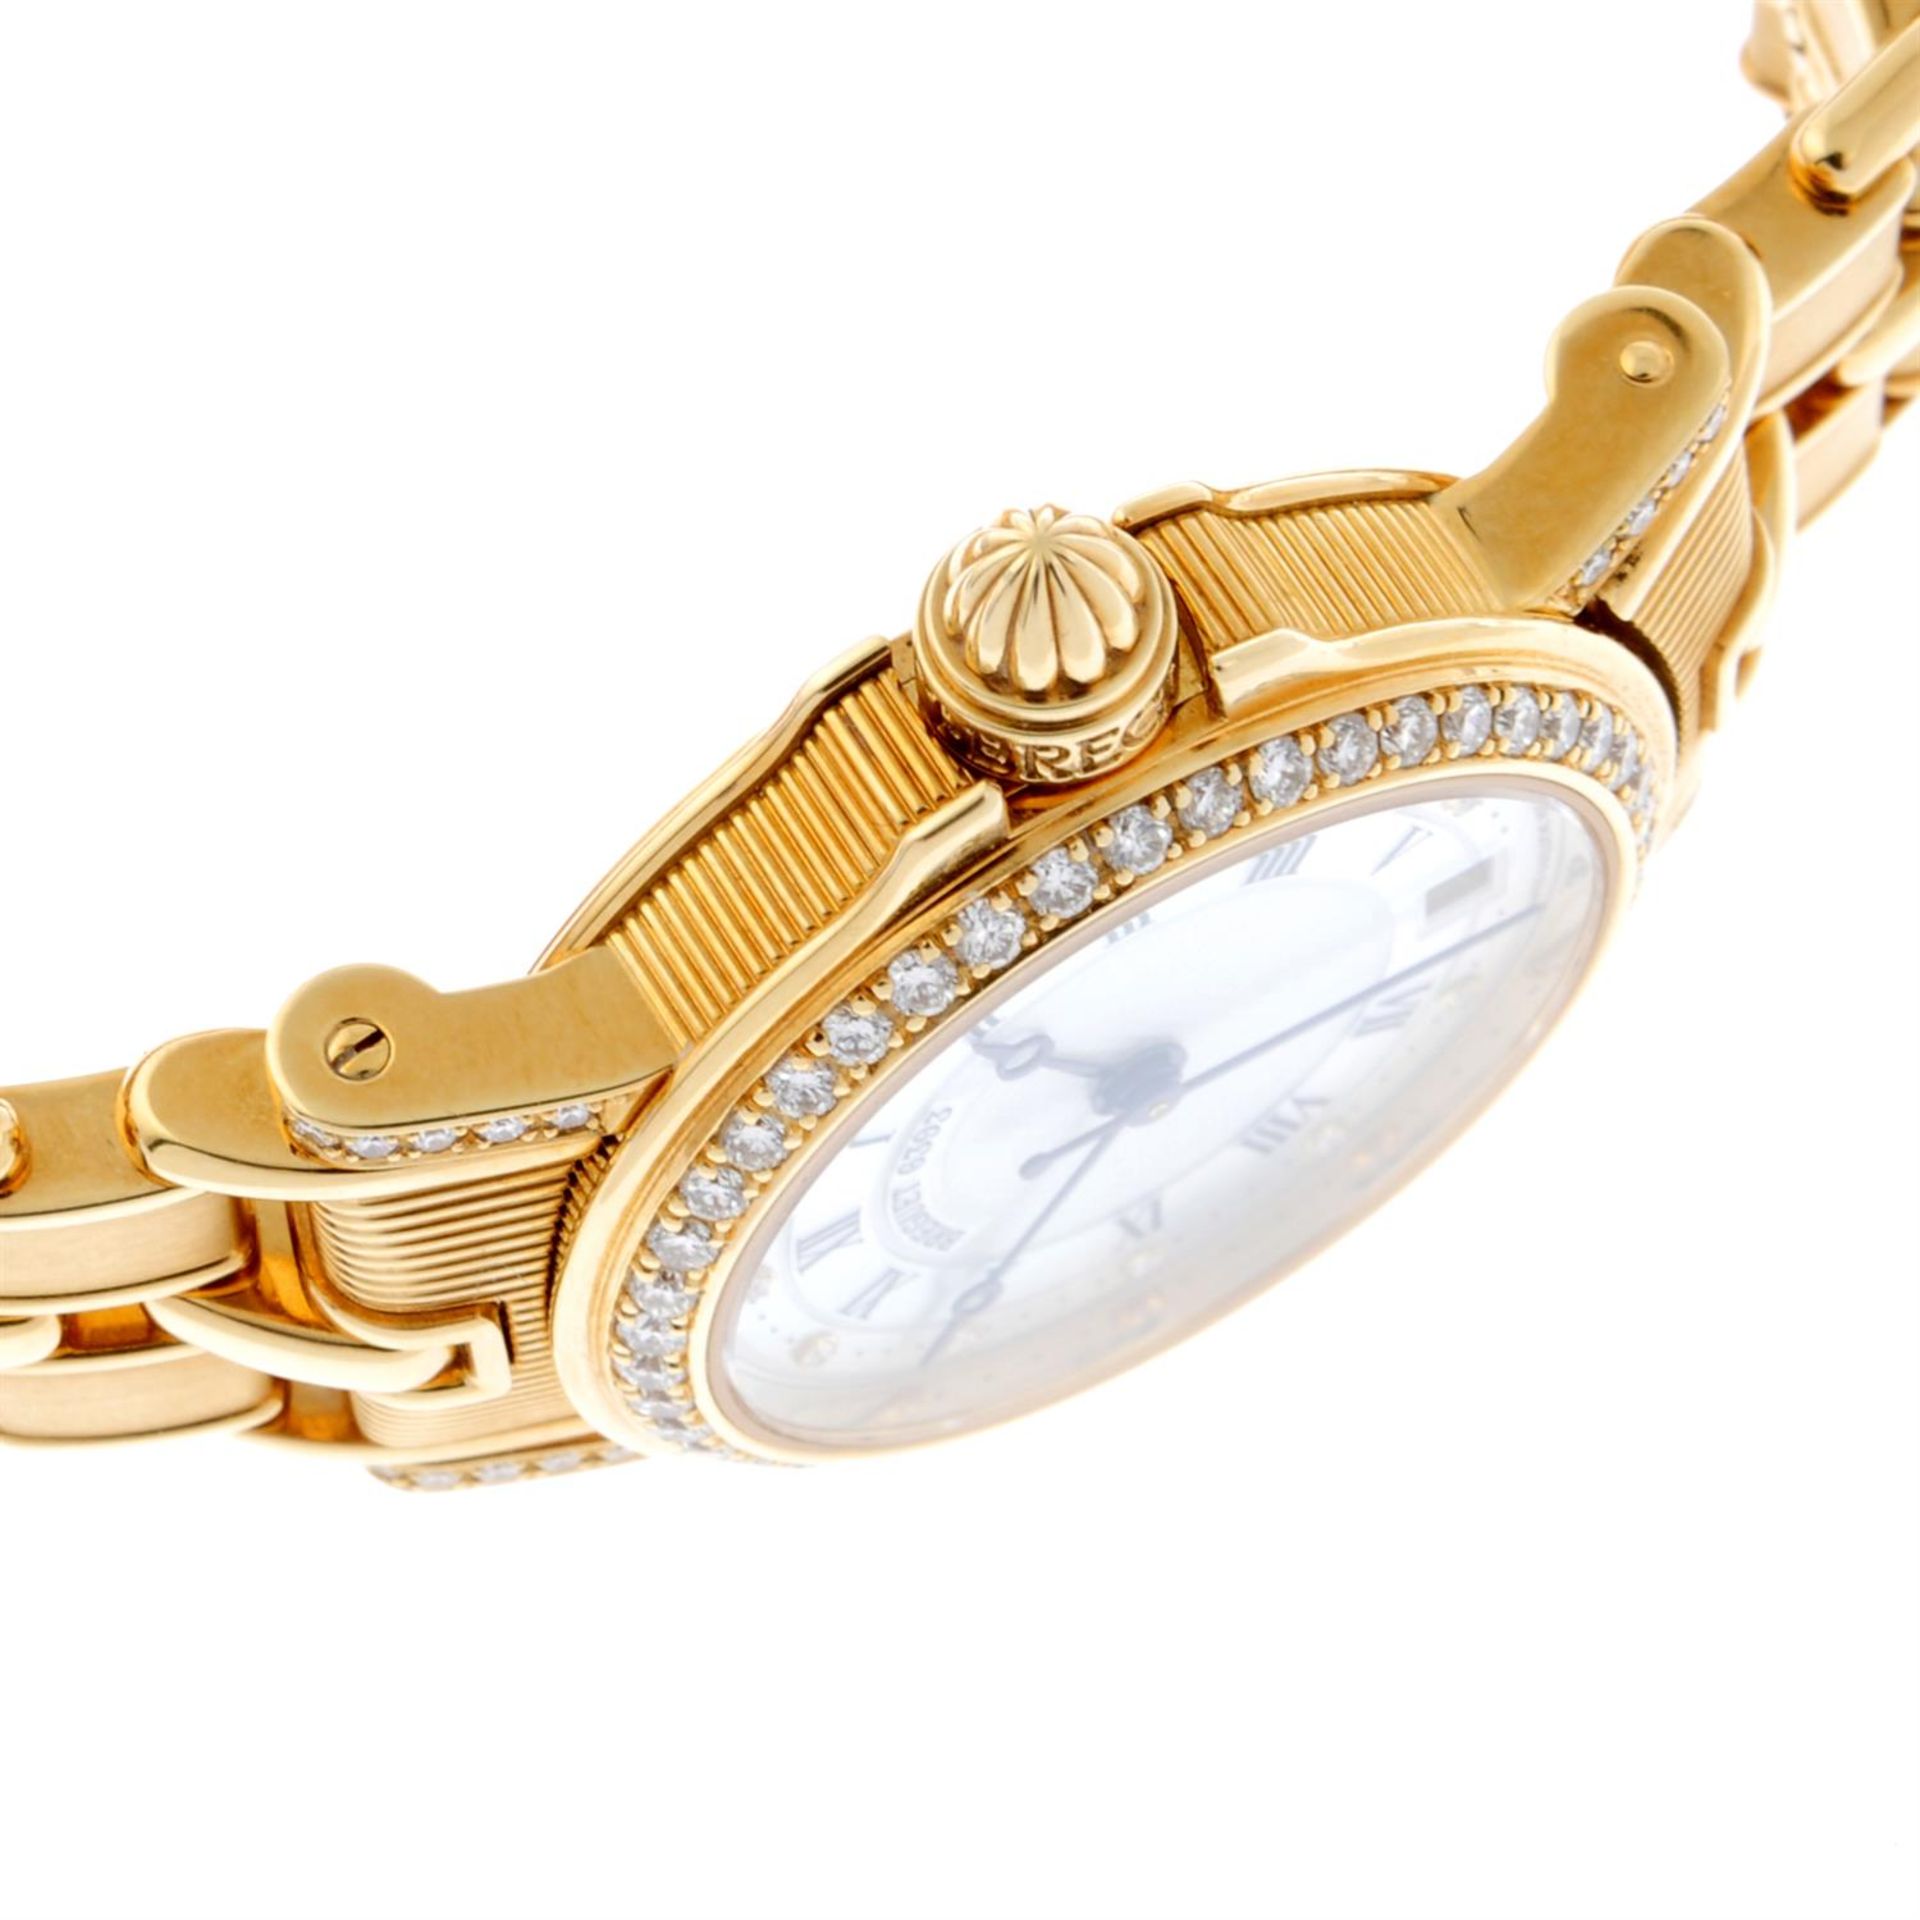 BREGUET - a diamond set 18ct yellow gold Horloger De La Marine bracelet watch, 26mm. - Bild 3 aus 7